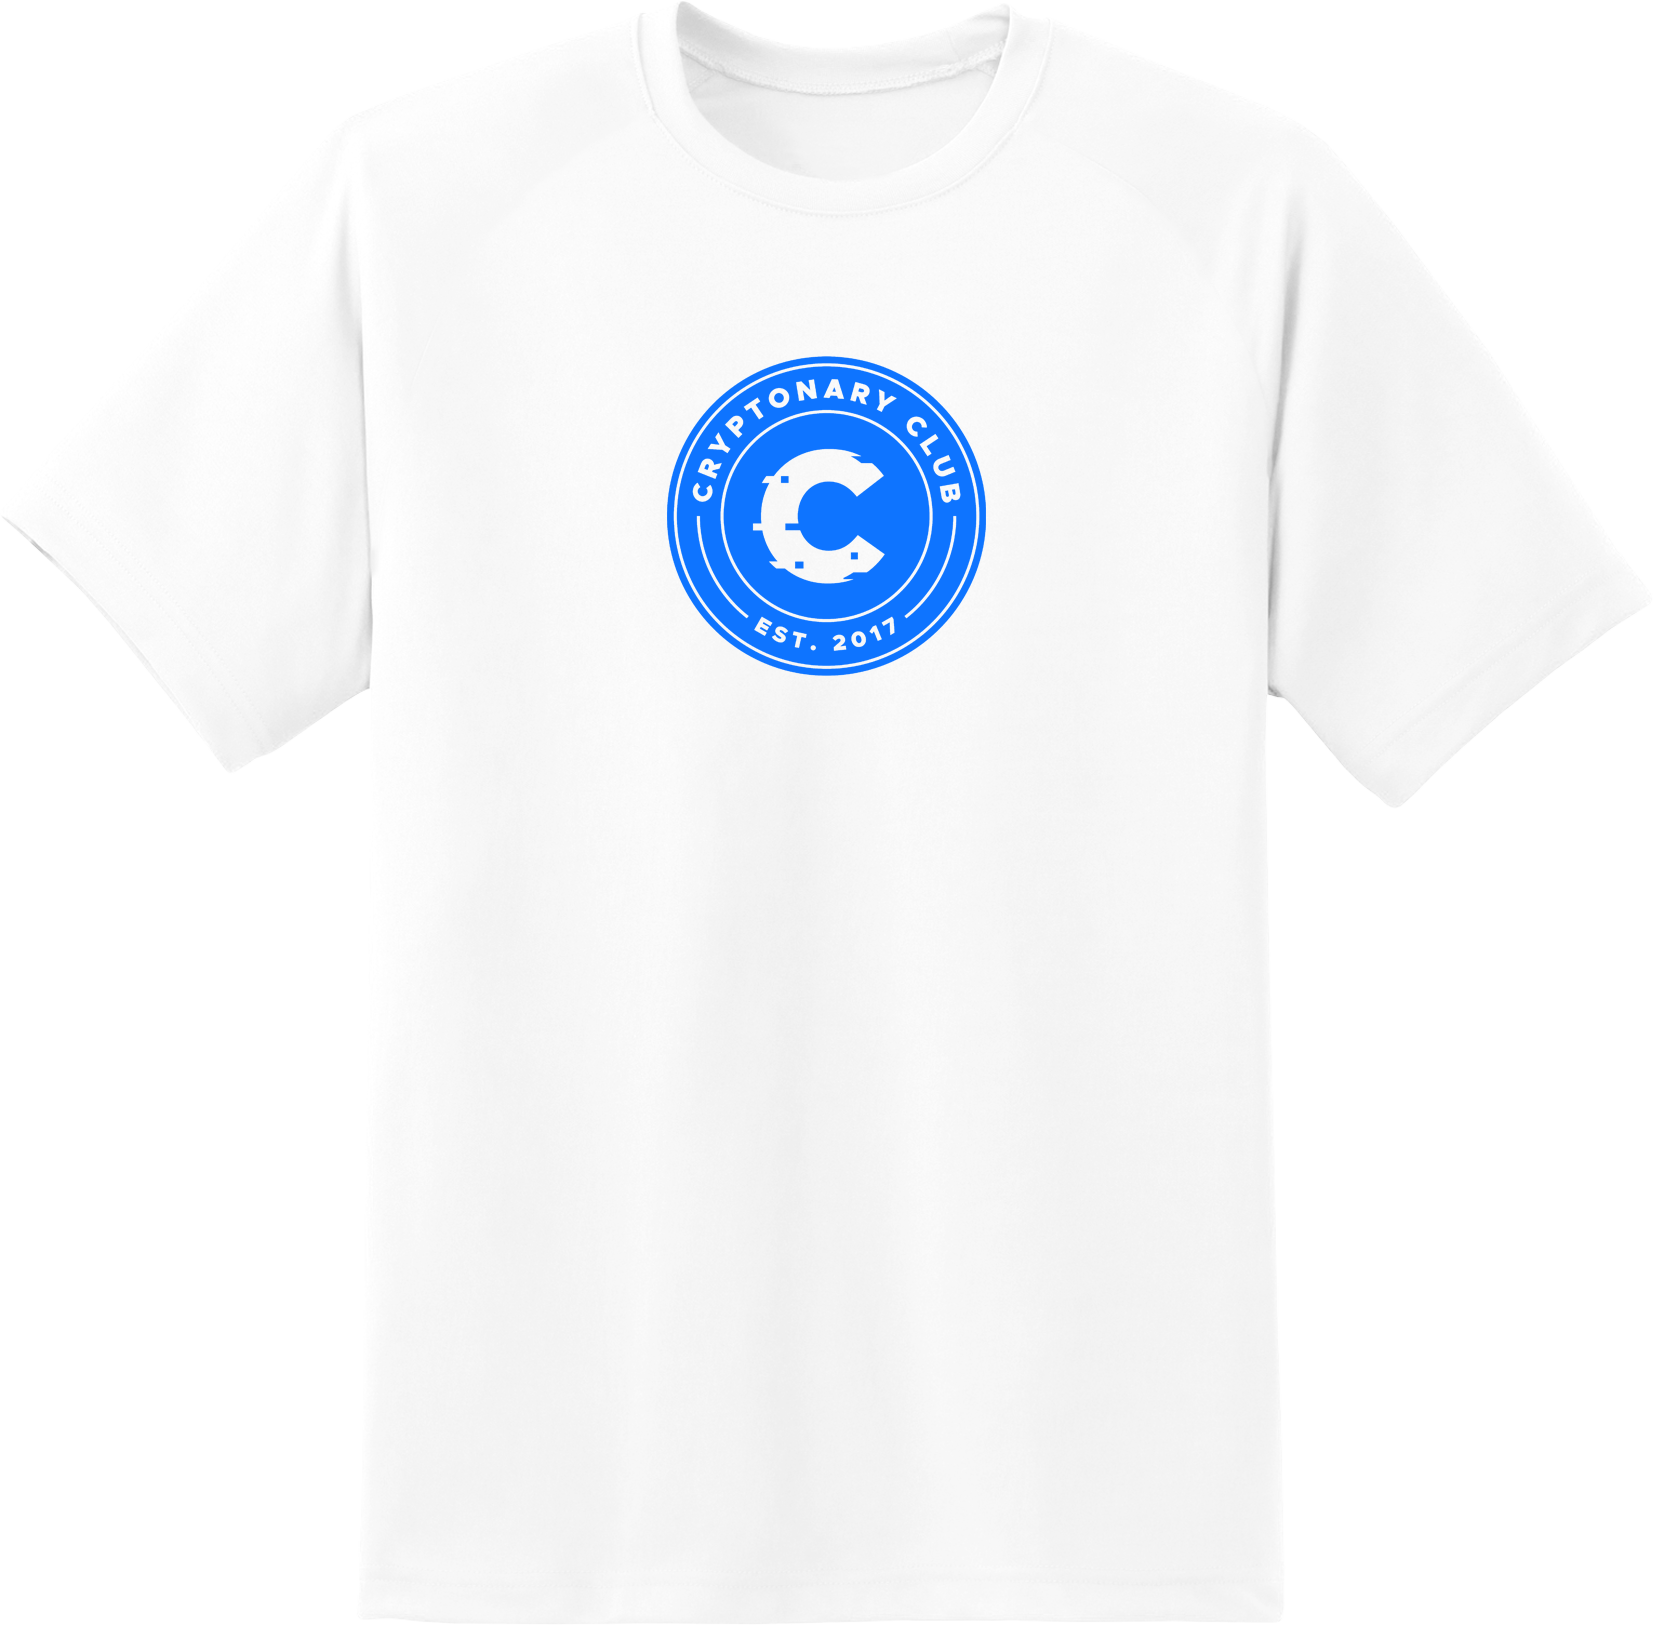 Cryptonary Club T-Shirt - White and Blue